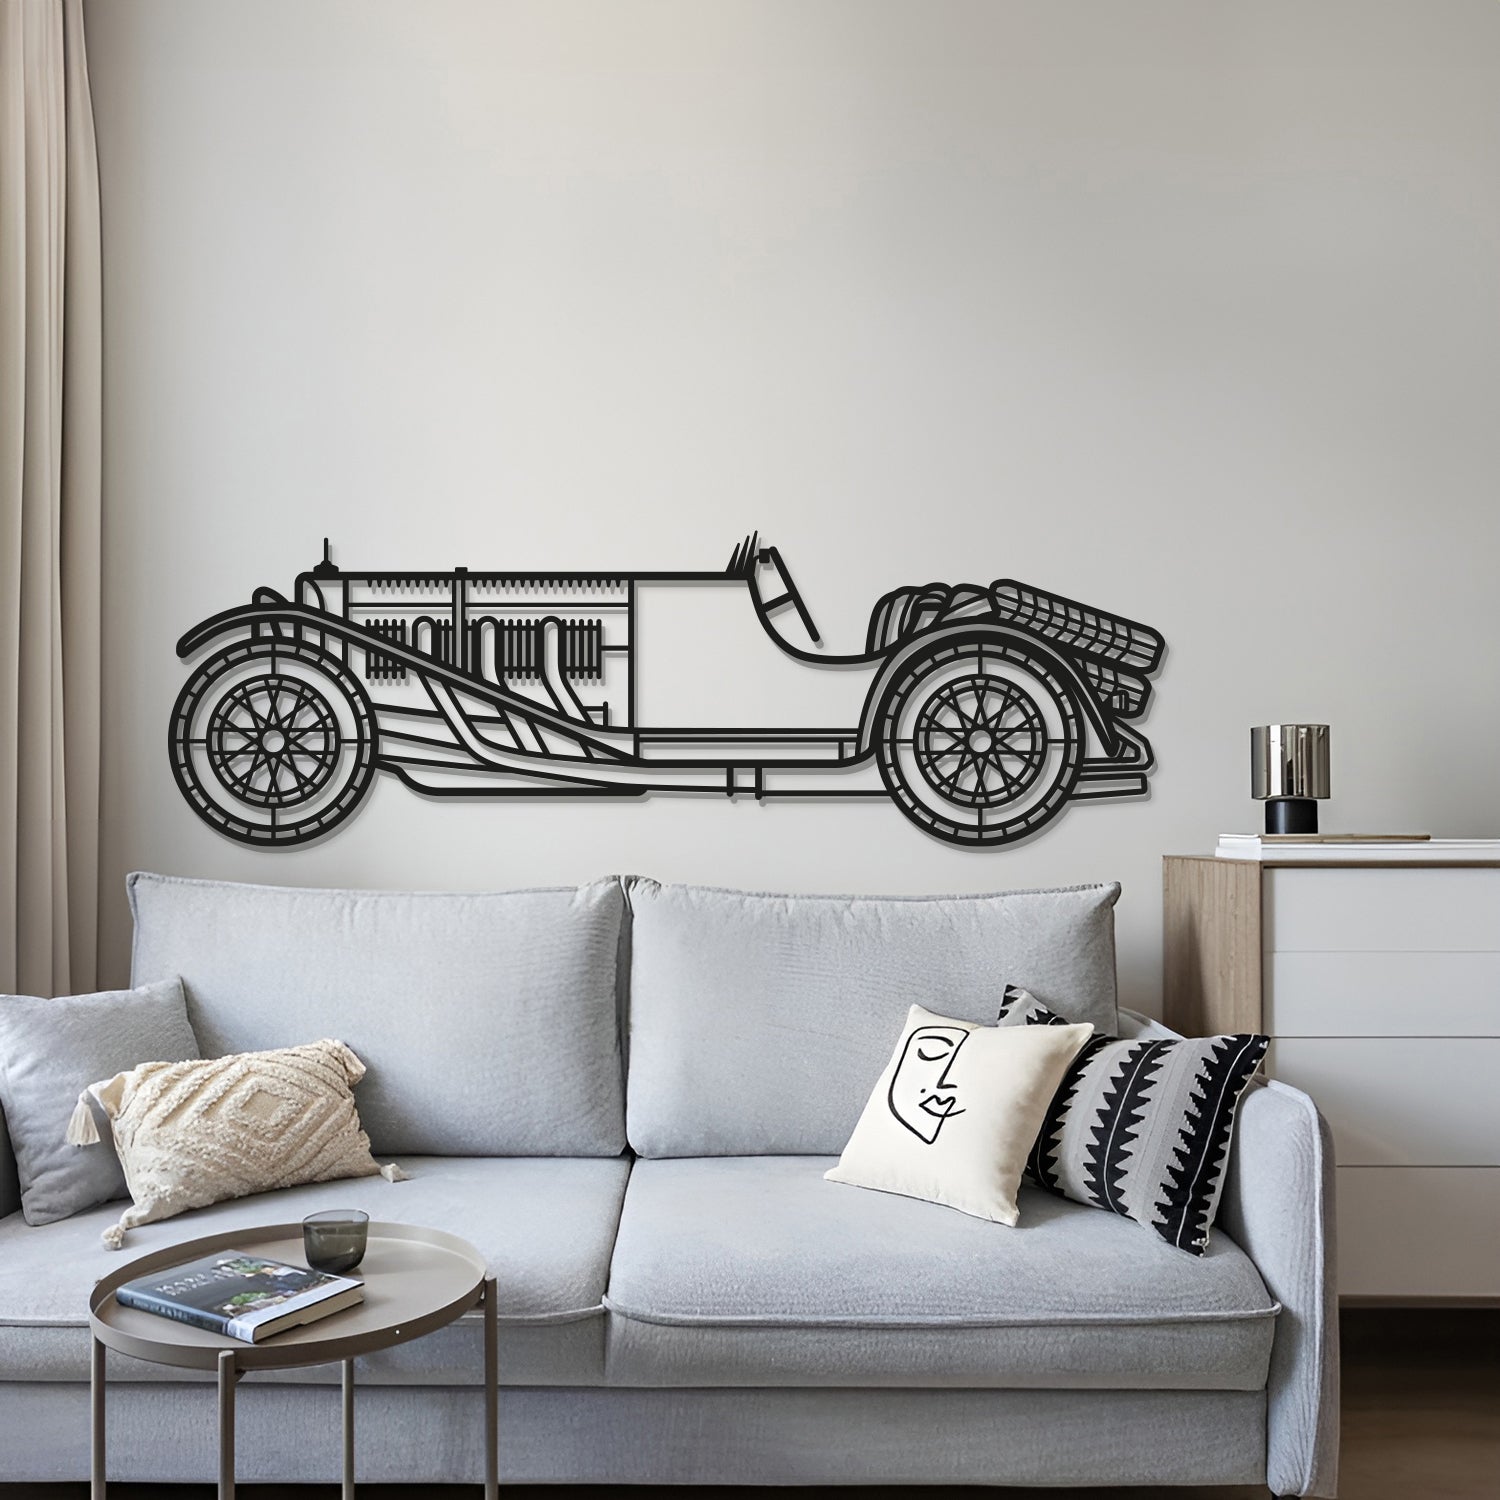 1929 SSK Metal Car Wall Art - MT0013